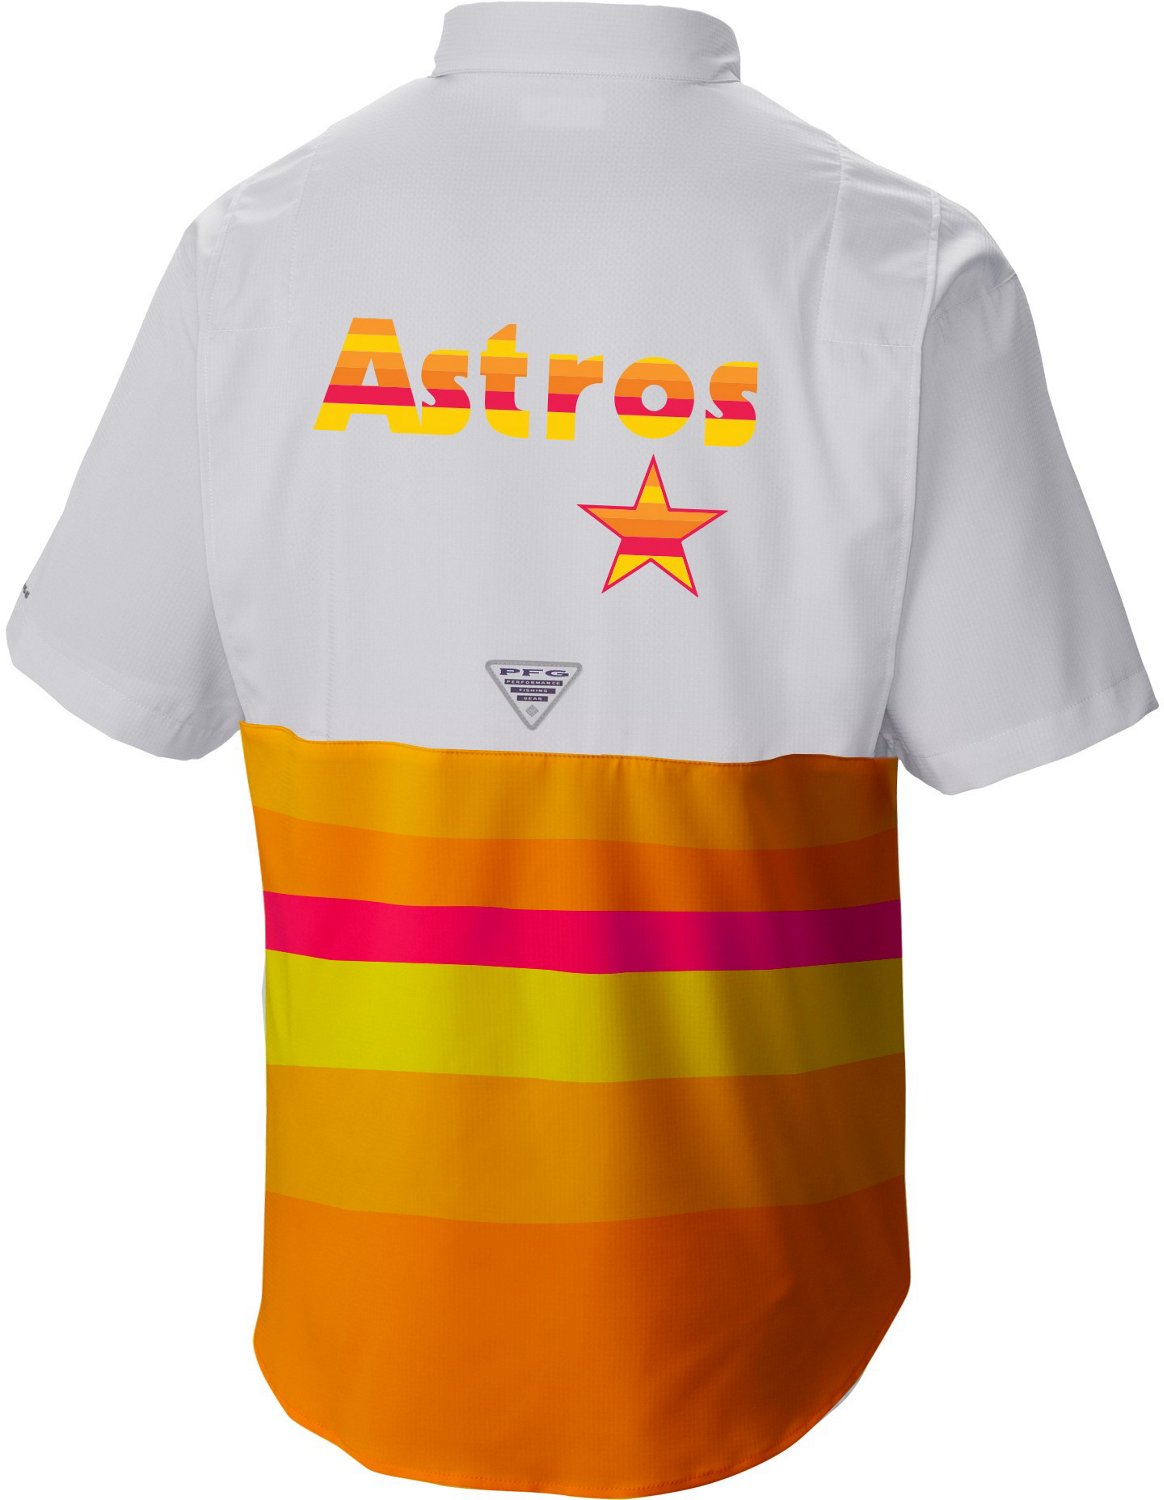 men astros columbia shirt